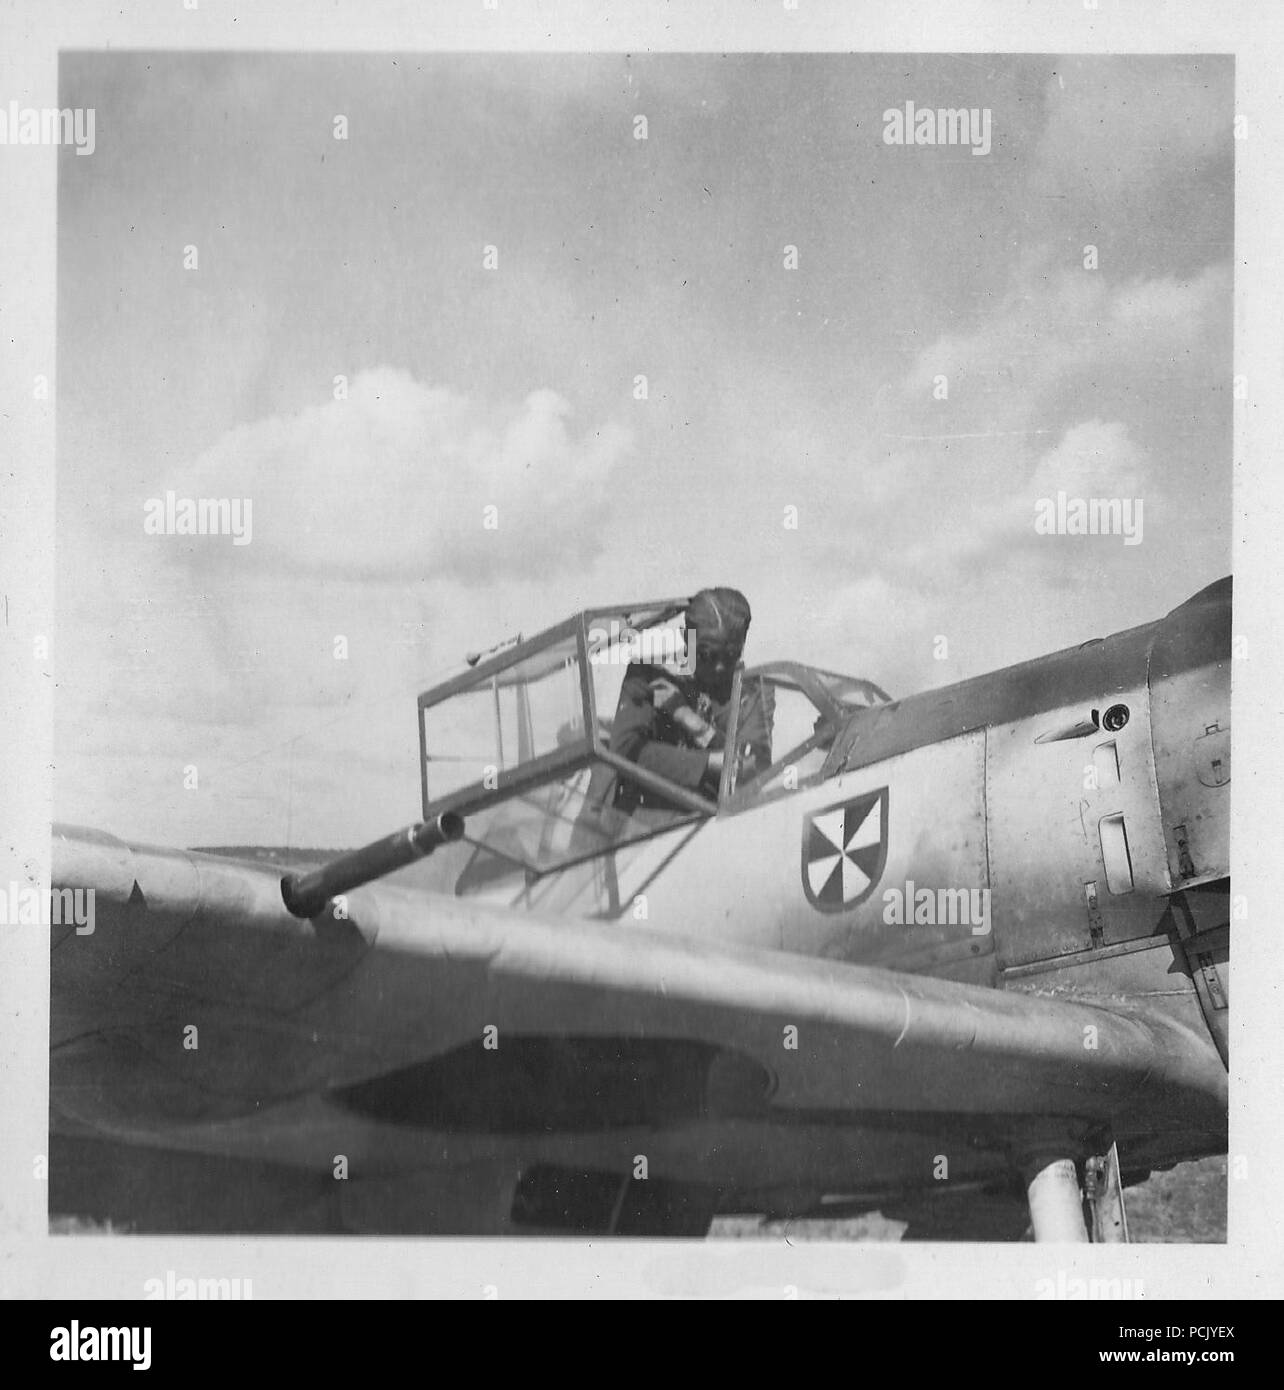 Immagine da un album di foto relative a II. Gruppe, Jagdgeschwader 3: Oberleutnant Franz von Werra, Gruppen aiutante di II. Gruppe, Jagdgeschwader 3, si prepara a scendere dal proprio BF109E durante l'estate del 1940. Foto Stock